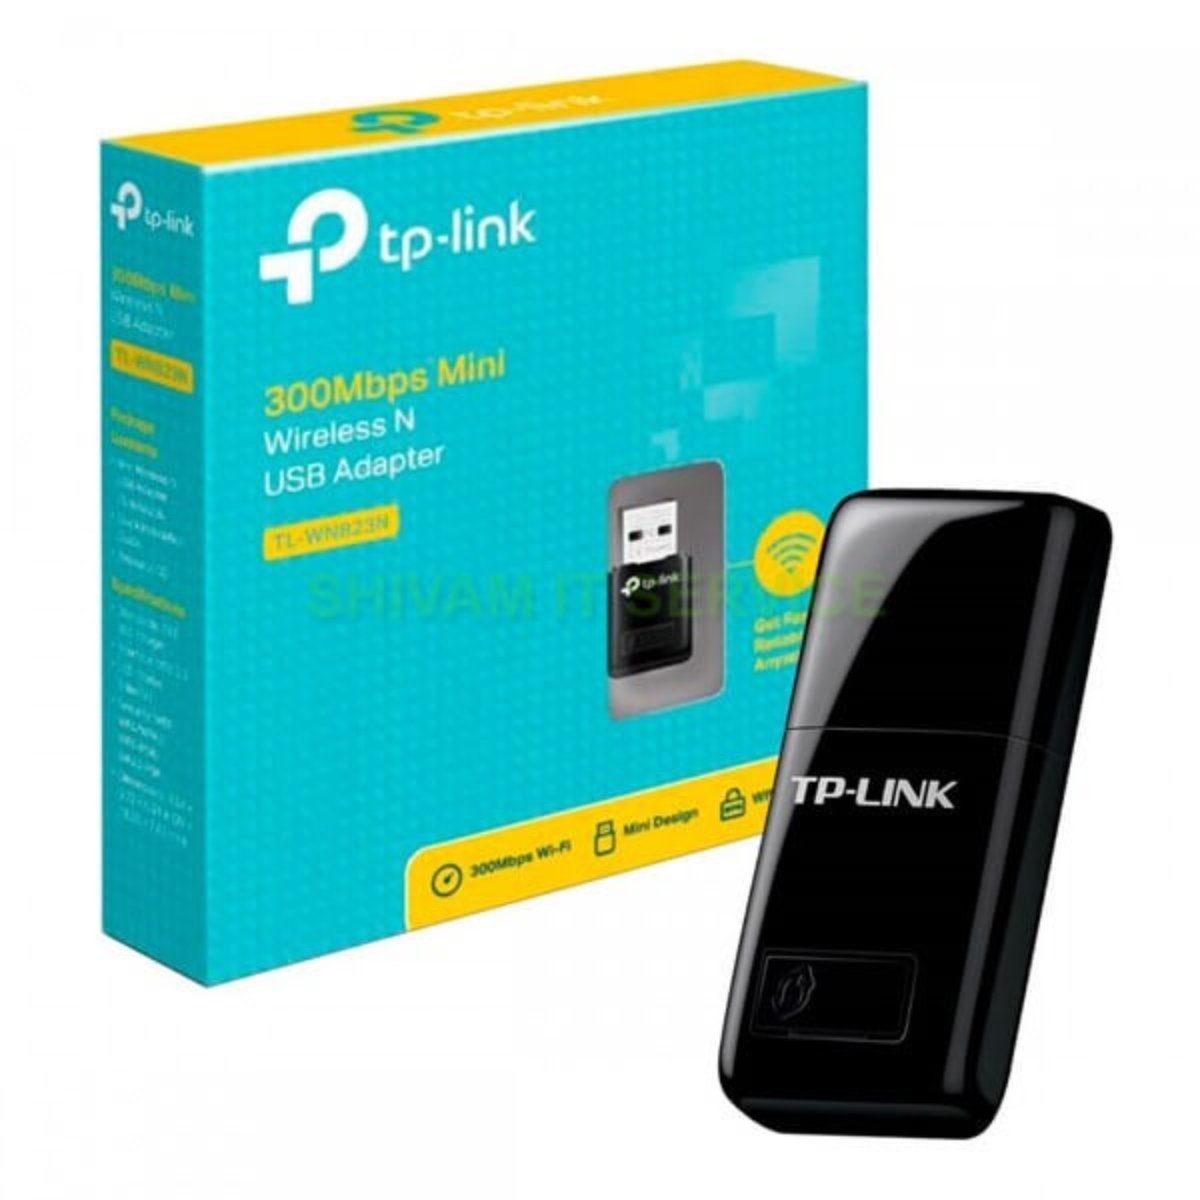 TP-Link WN823N 300Mbps Mini Wireless N USB Adapter